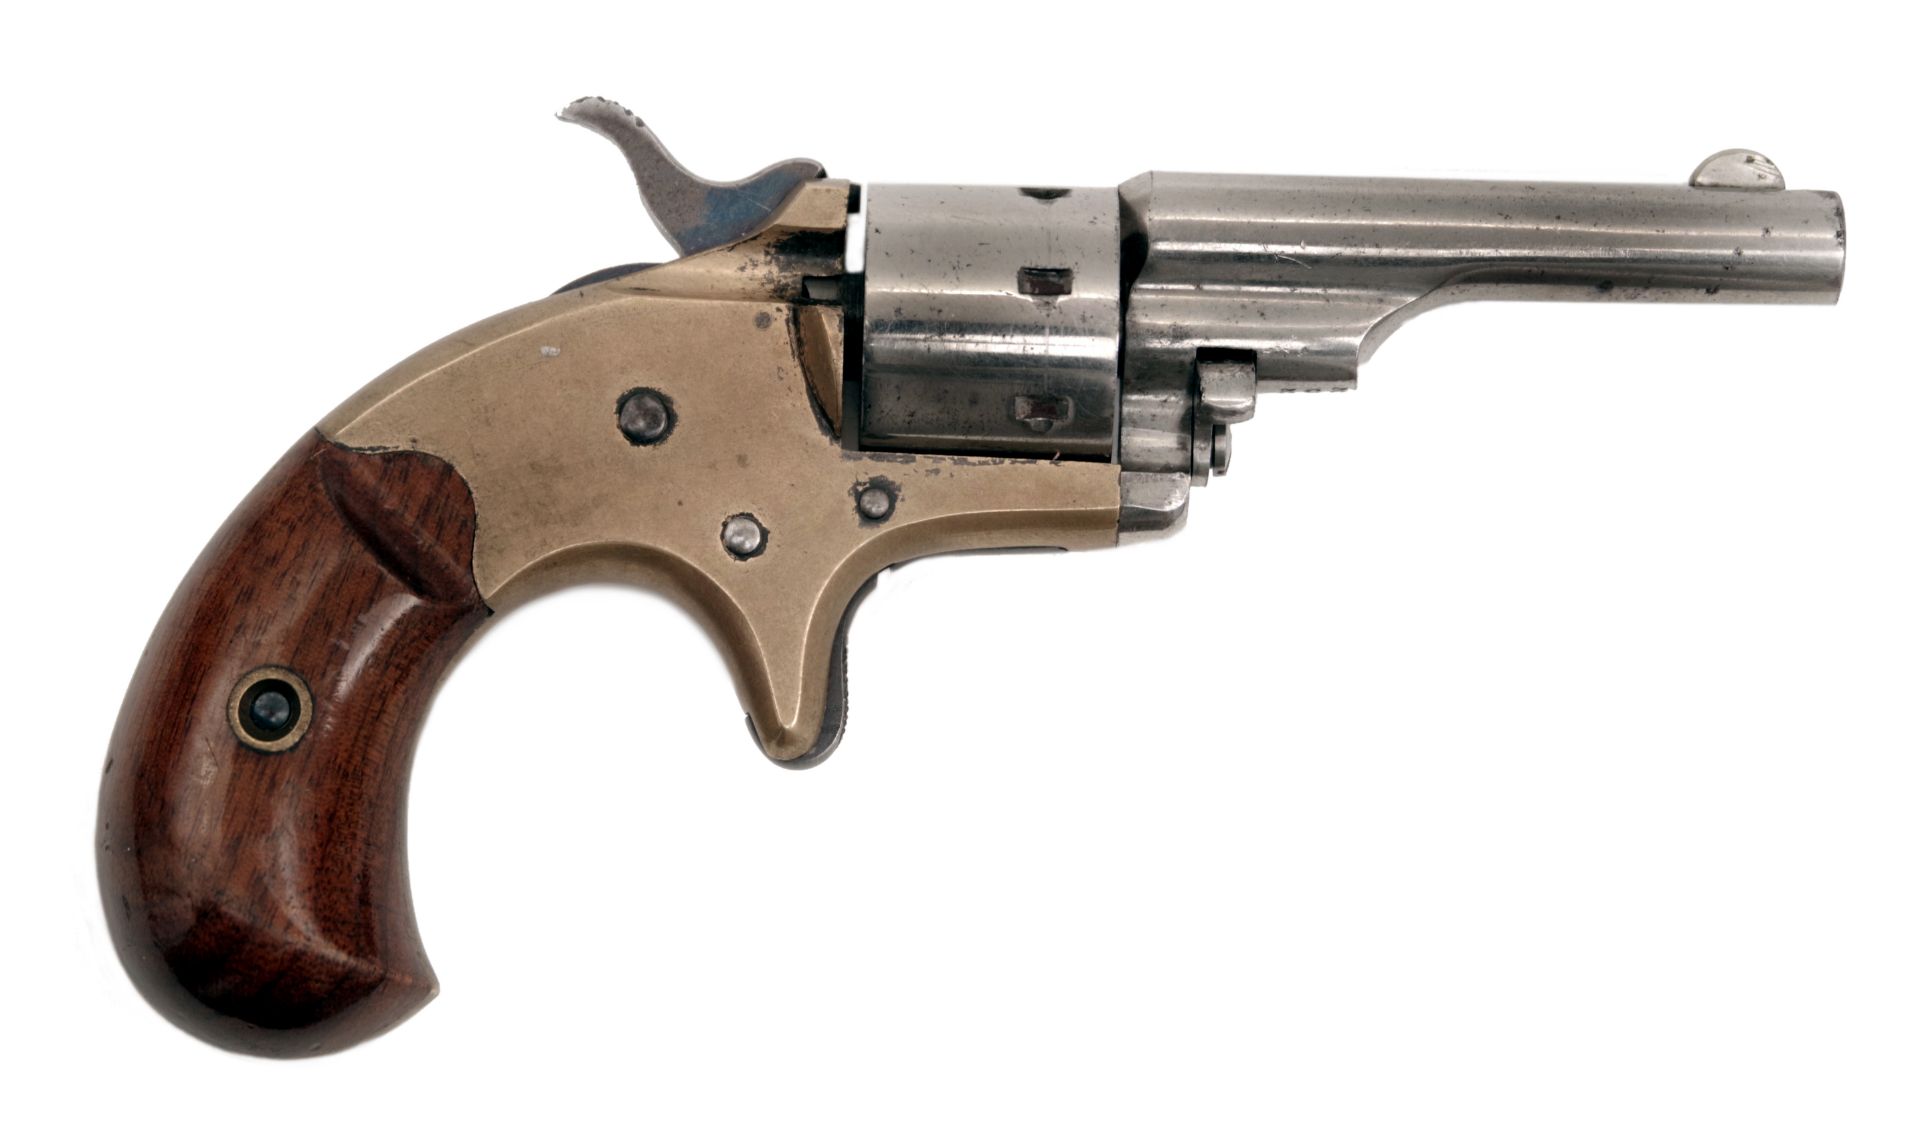 A Colt Open Top Pocket Model Revolver - Image 2 of 3